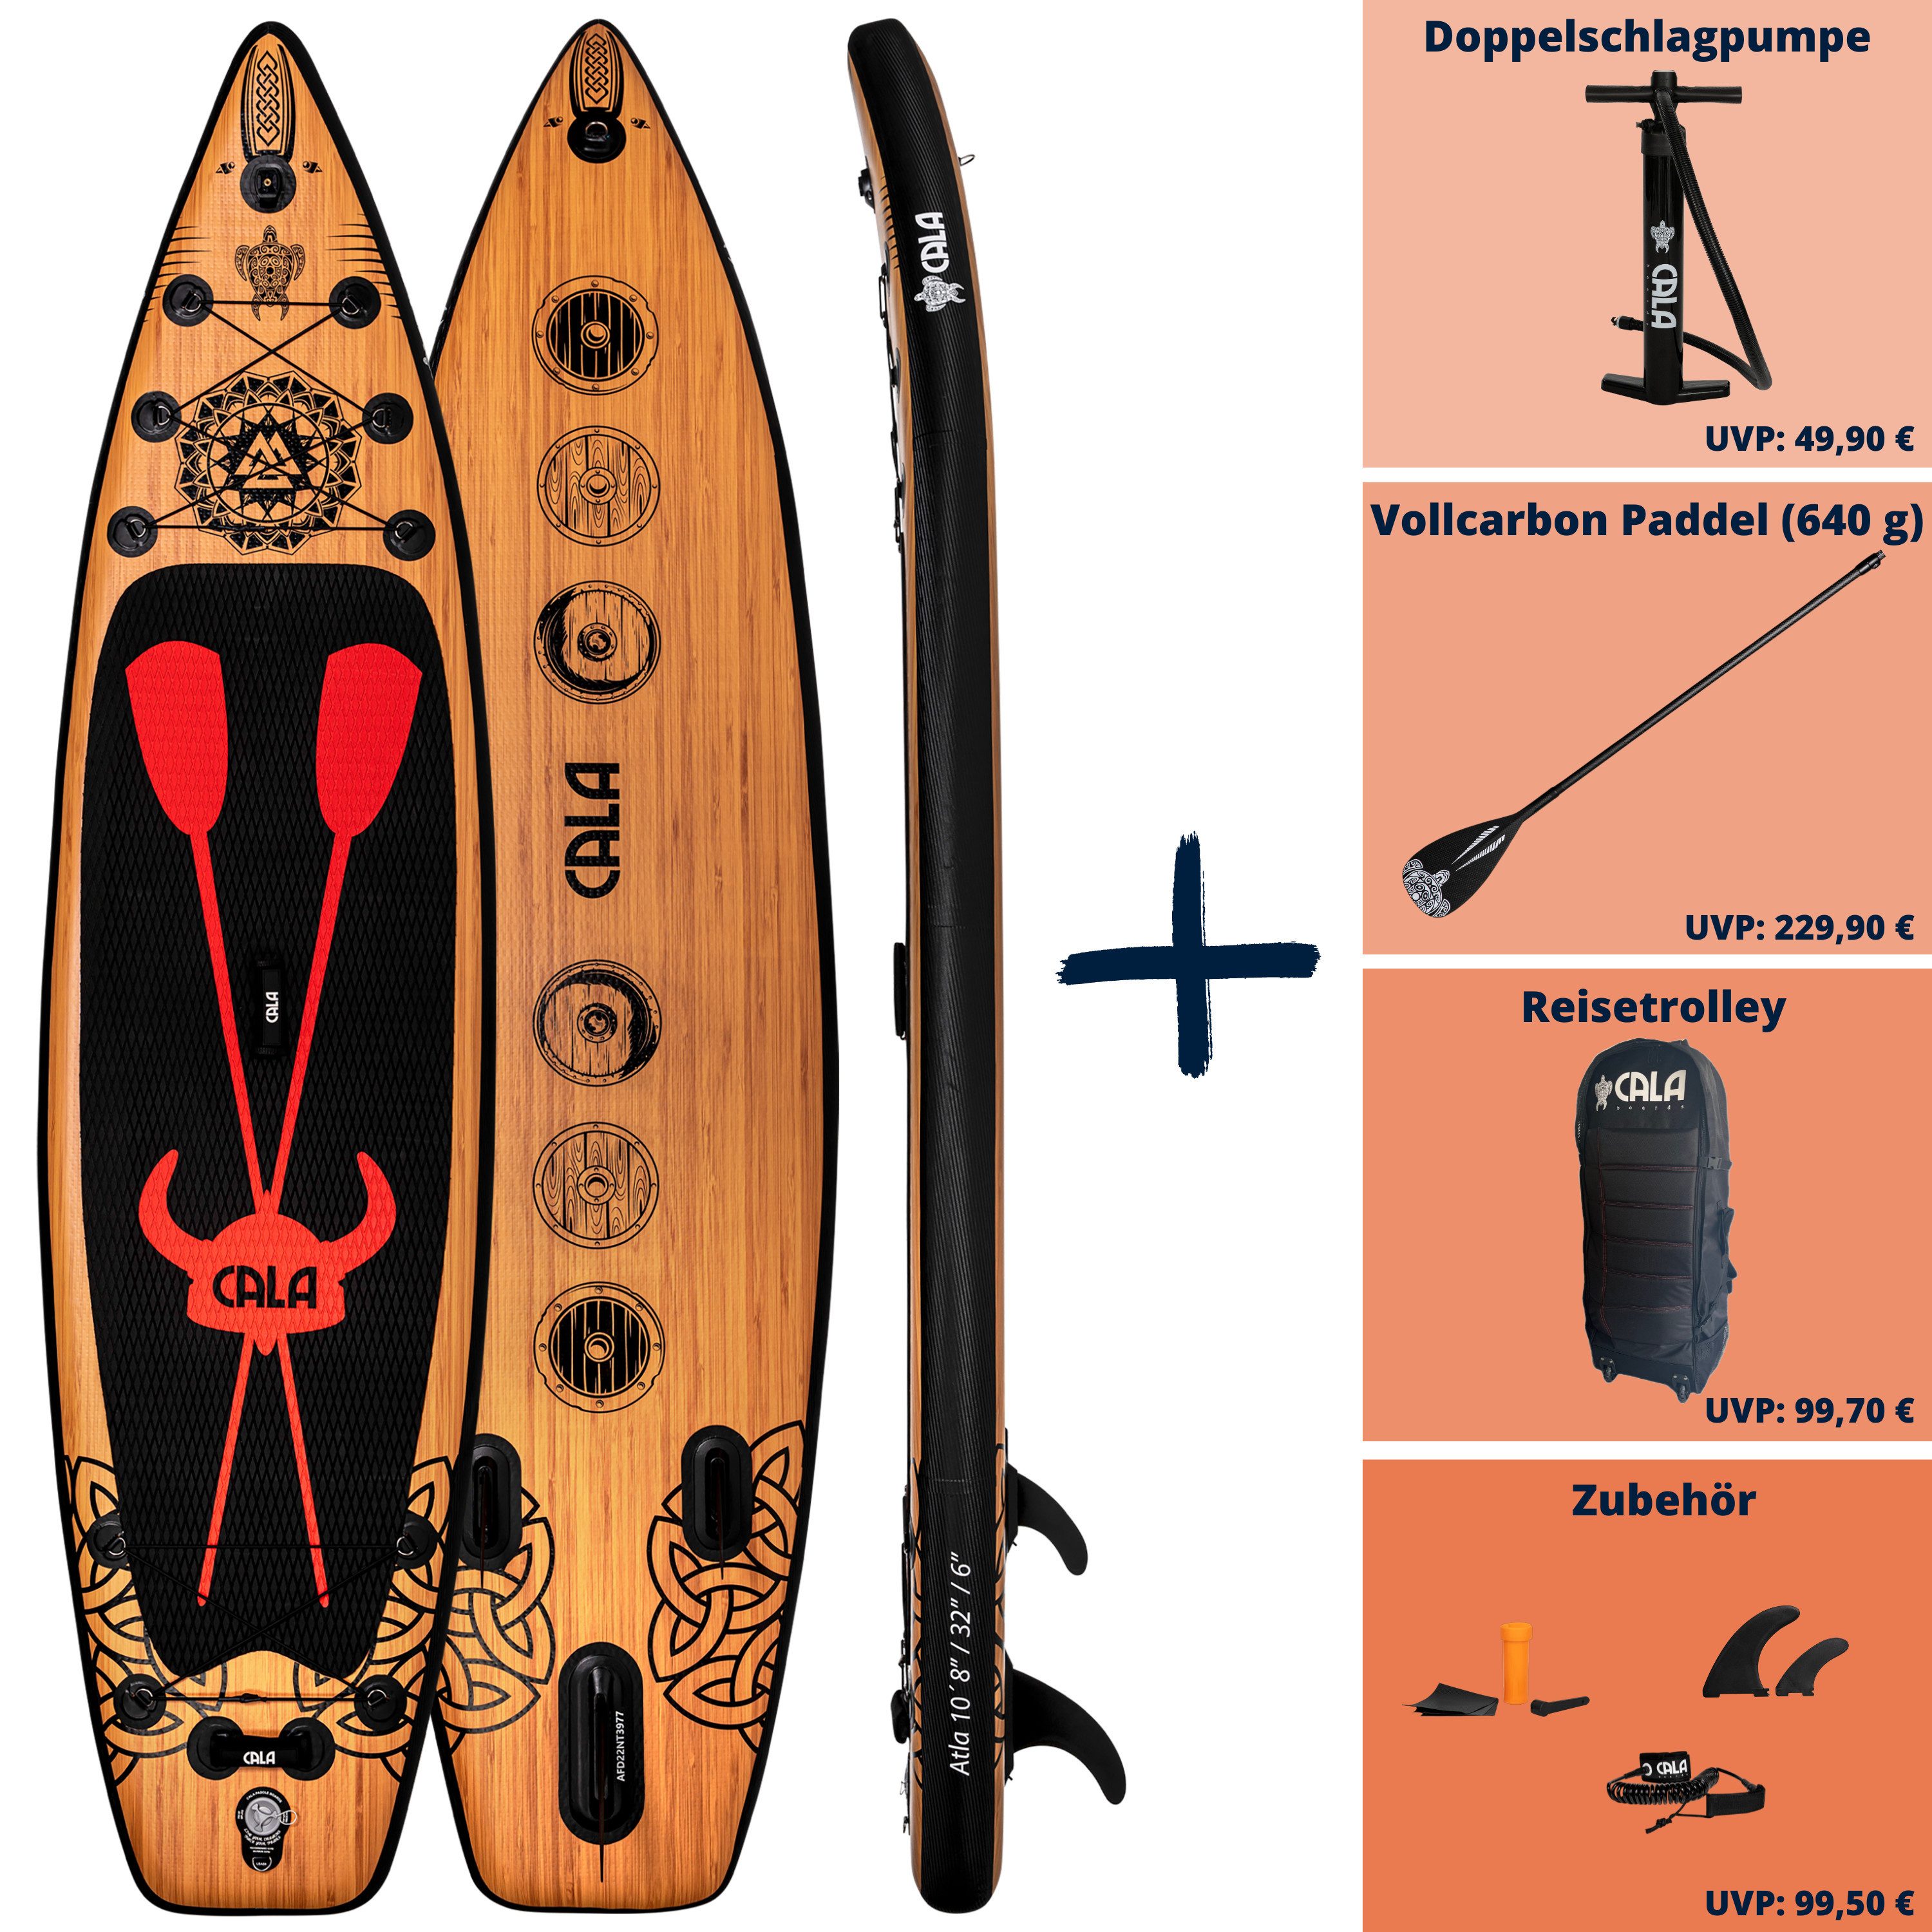 CALA SUP-Board ATLA, robustes SUP- Board aufblasbar, (Komplett-Set, SUP BOARD inkl. Board Bag, Pumpe, Vollcarbon-Paddel, Reparatur Kit), Äußerst widerstandsfähig gegen äußere Einflüsse